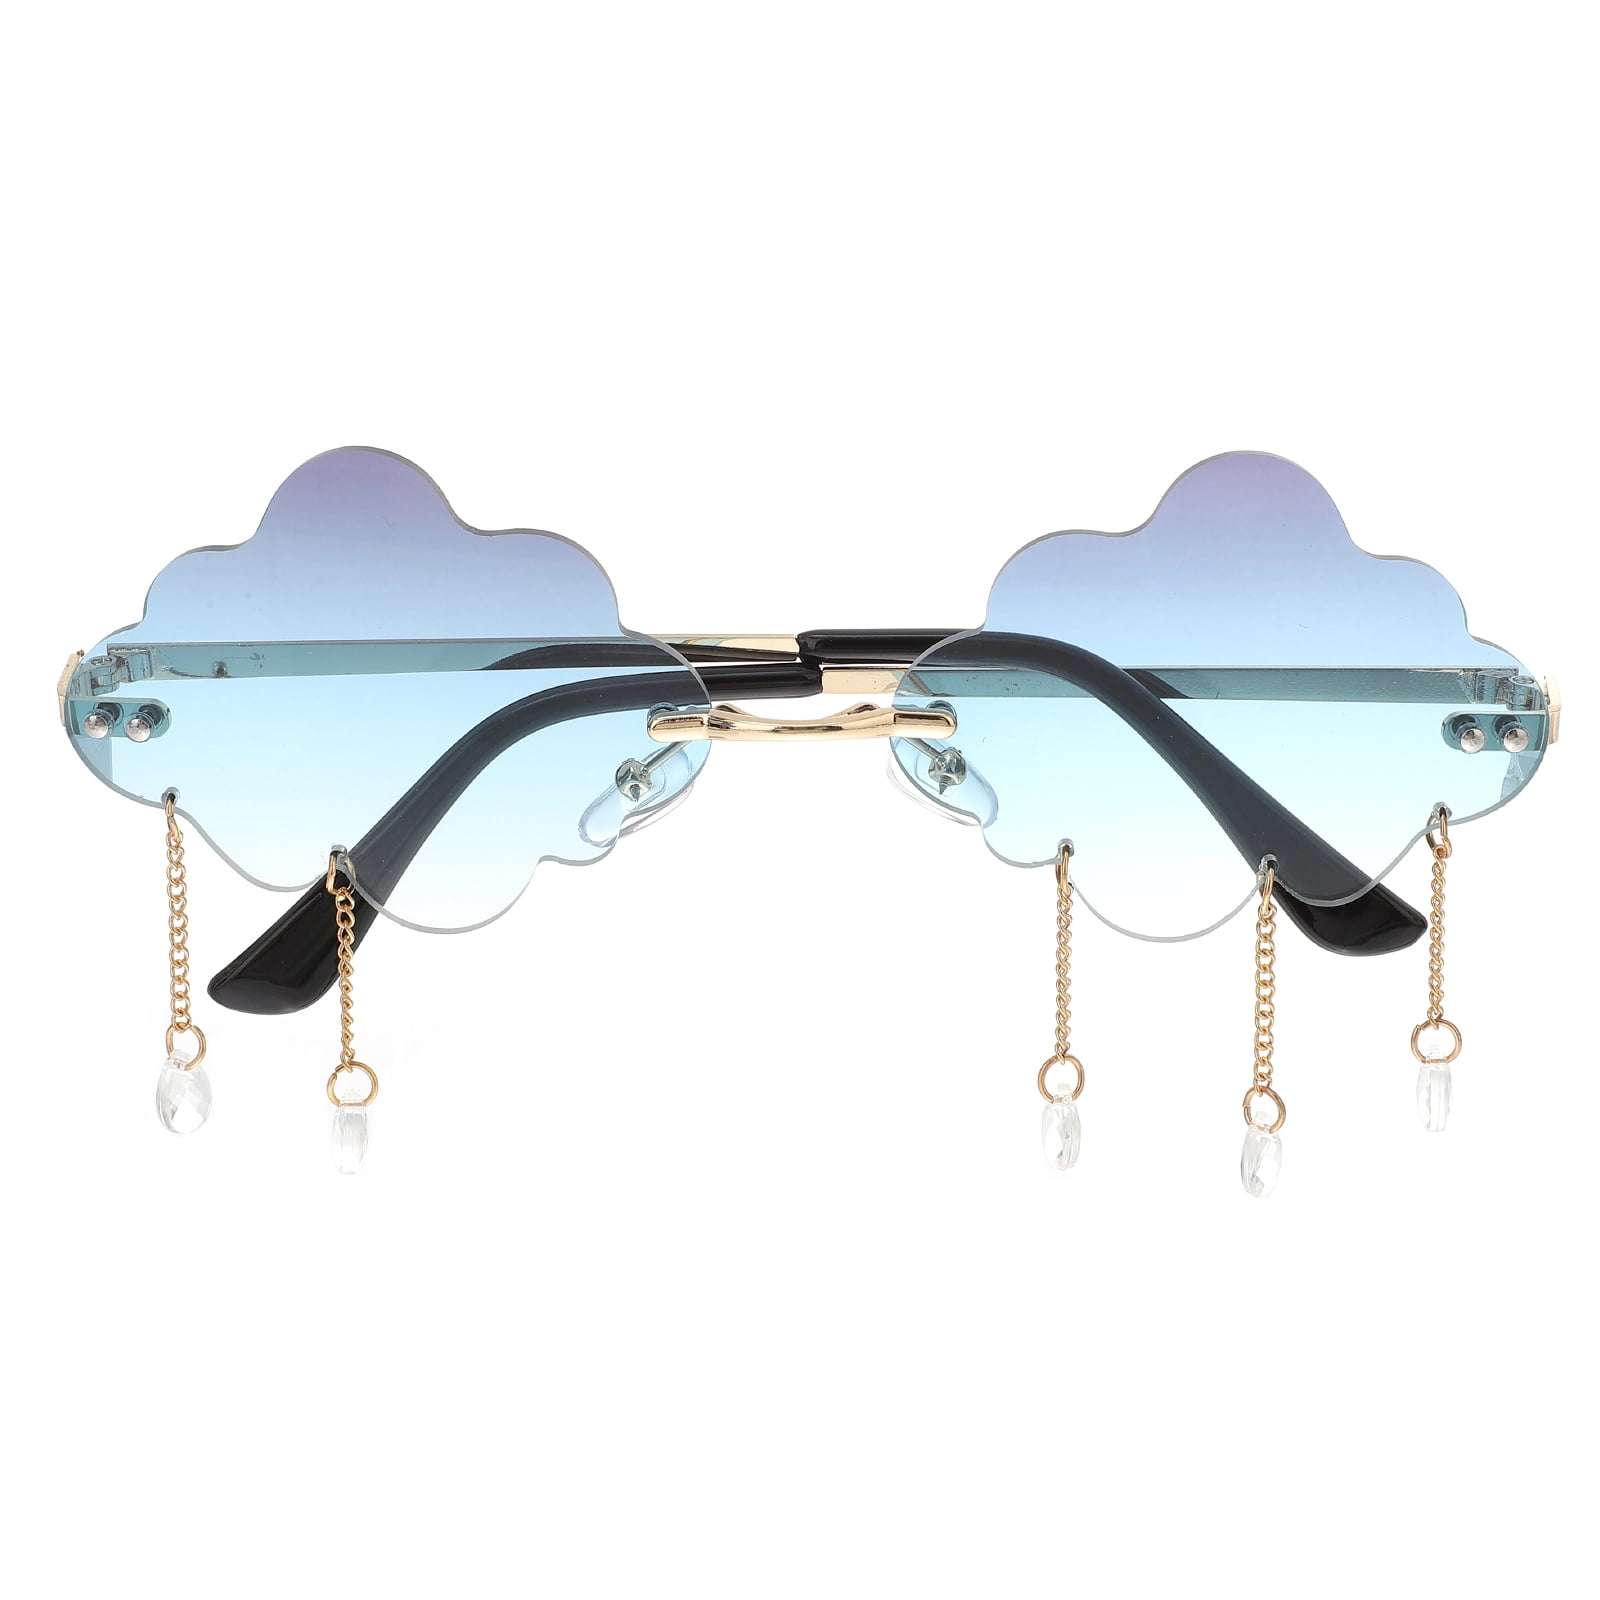 Fashion Cloud Sunglasses Rimless Glasses Festival Party Teardrop Shaped  Sunglasses 